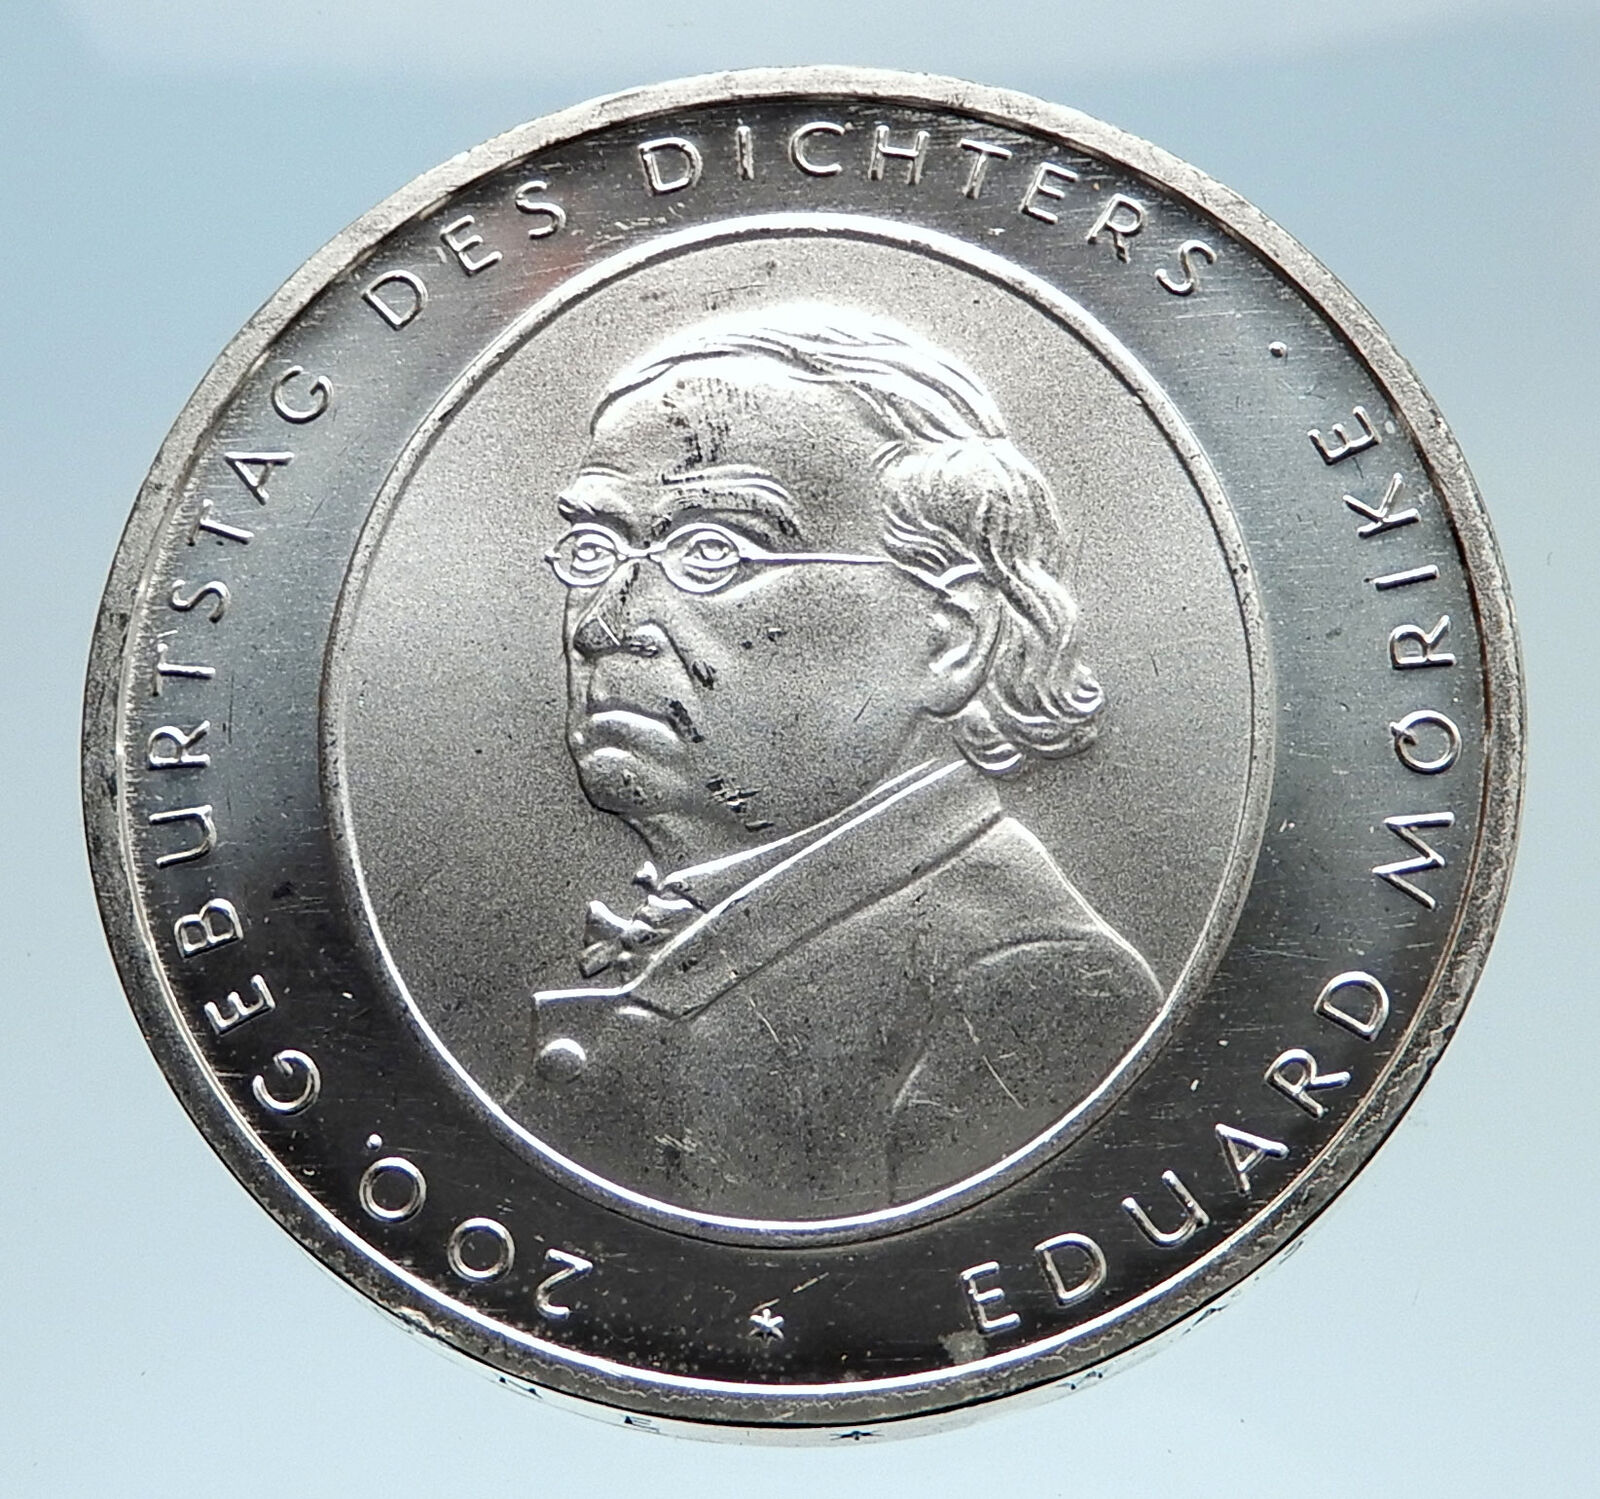 2004 GERMANY Poet & Writer Eduard Morike Proof Silver German 10 Euro Coin i75053